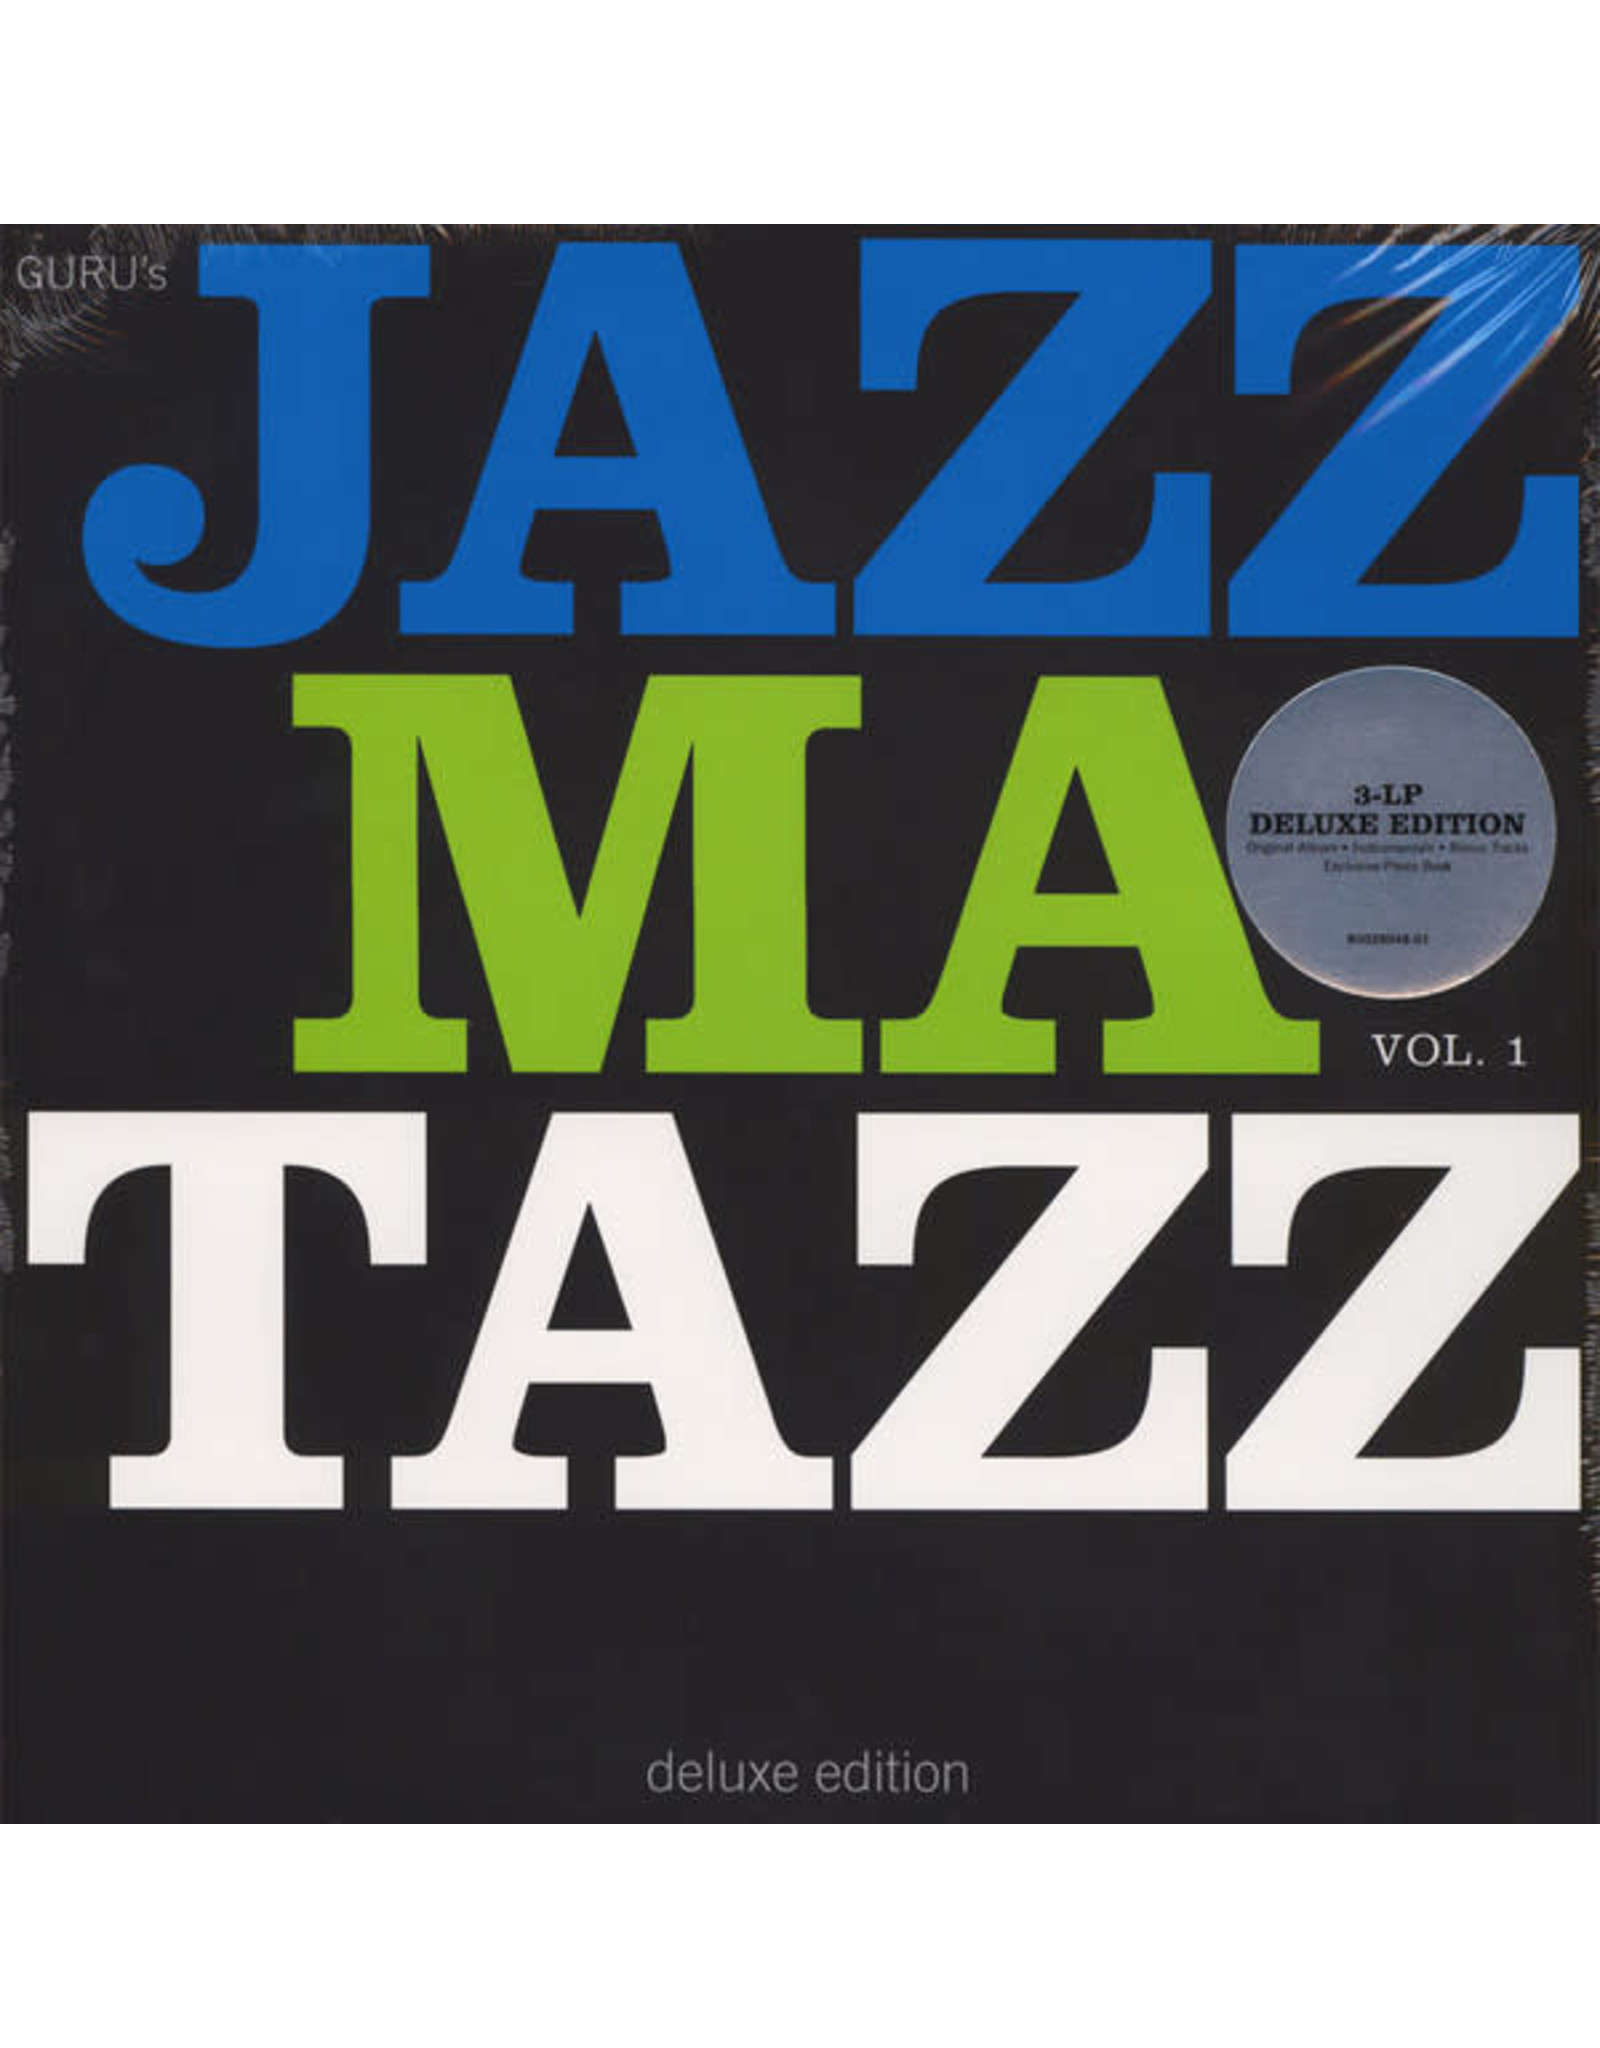 Guru - Jazzmatazz Vol. 1 (Deluxe Edition)